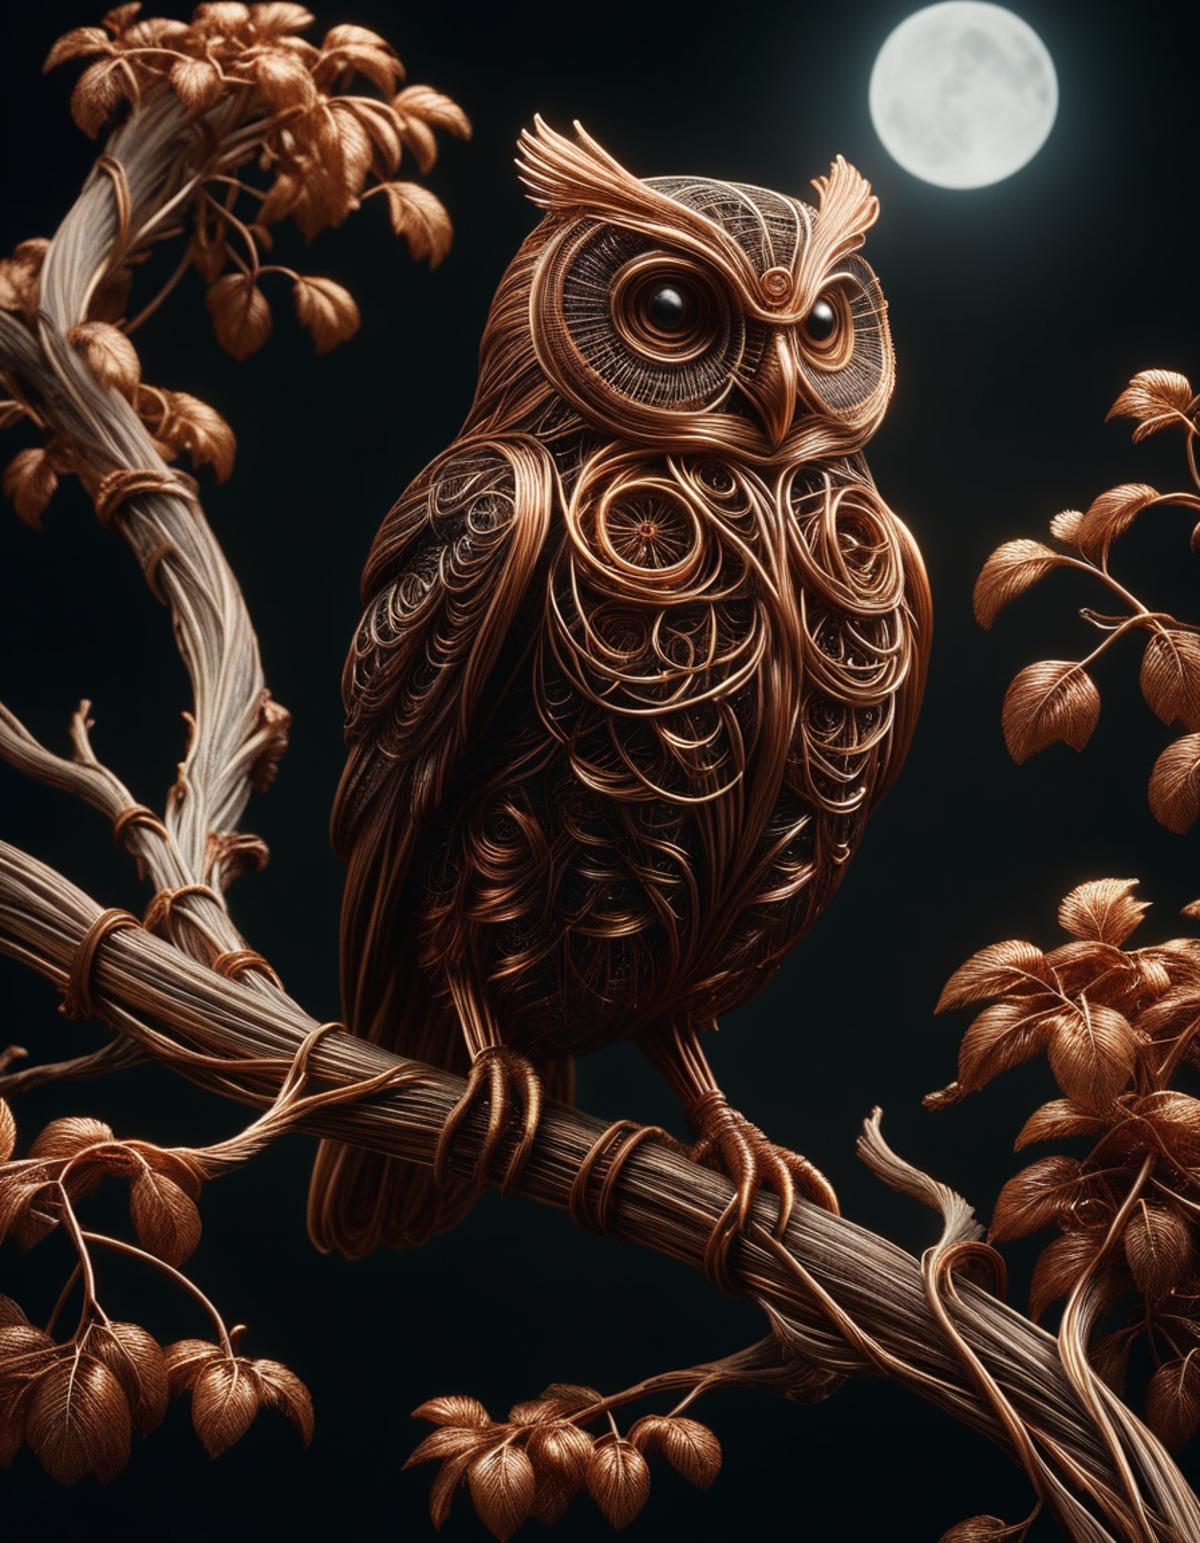 A 3D image of a bird on a branch with a moon in the background.